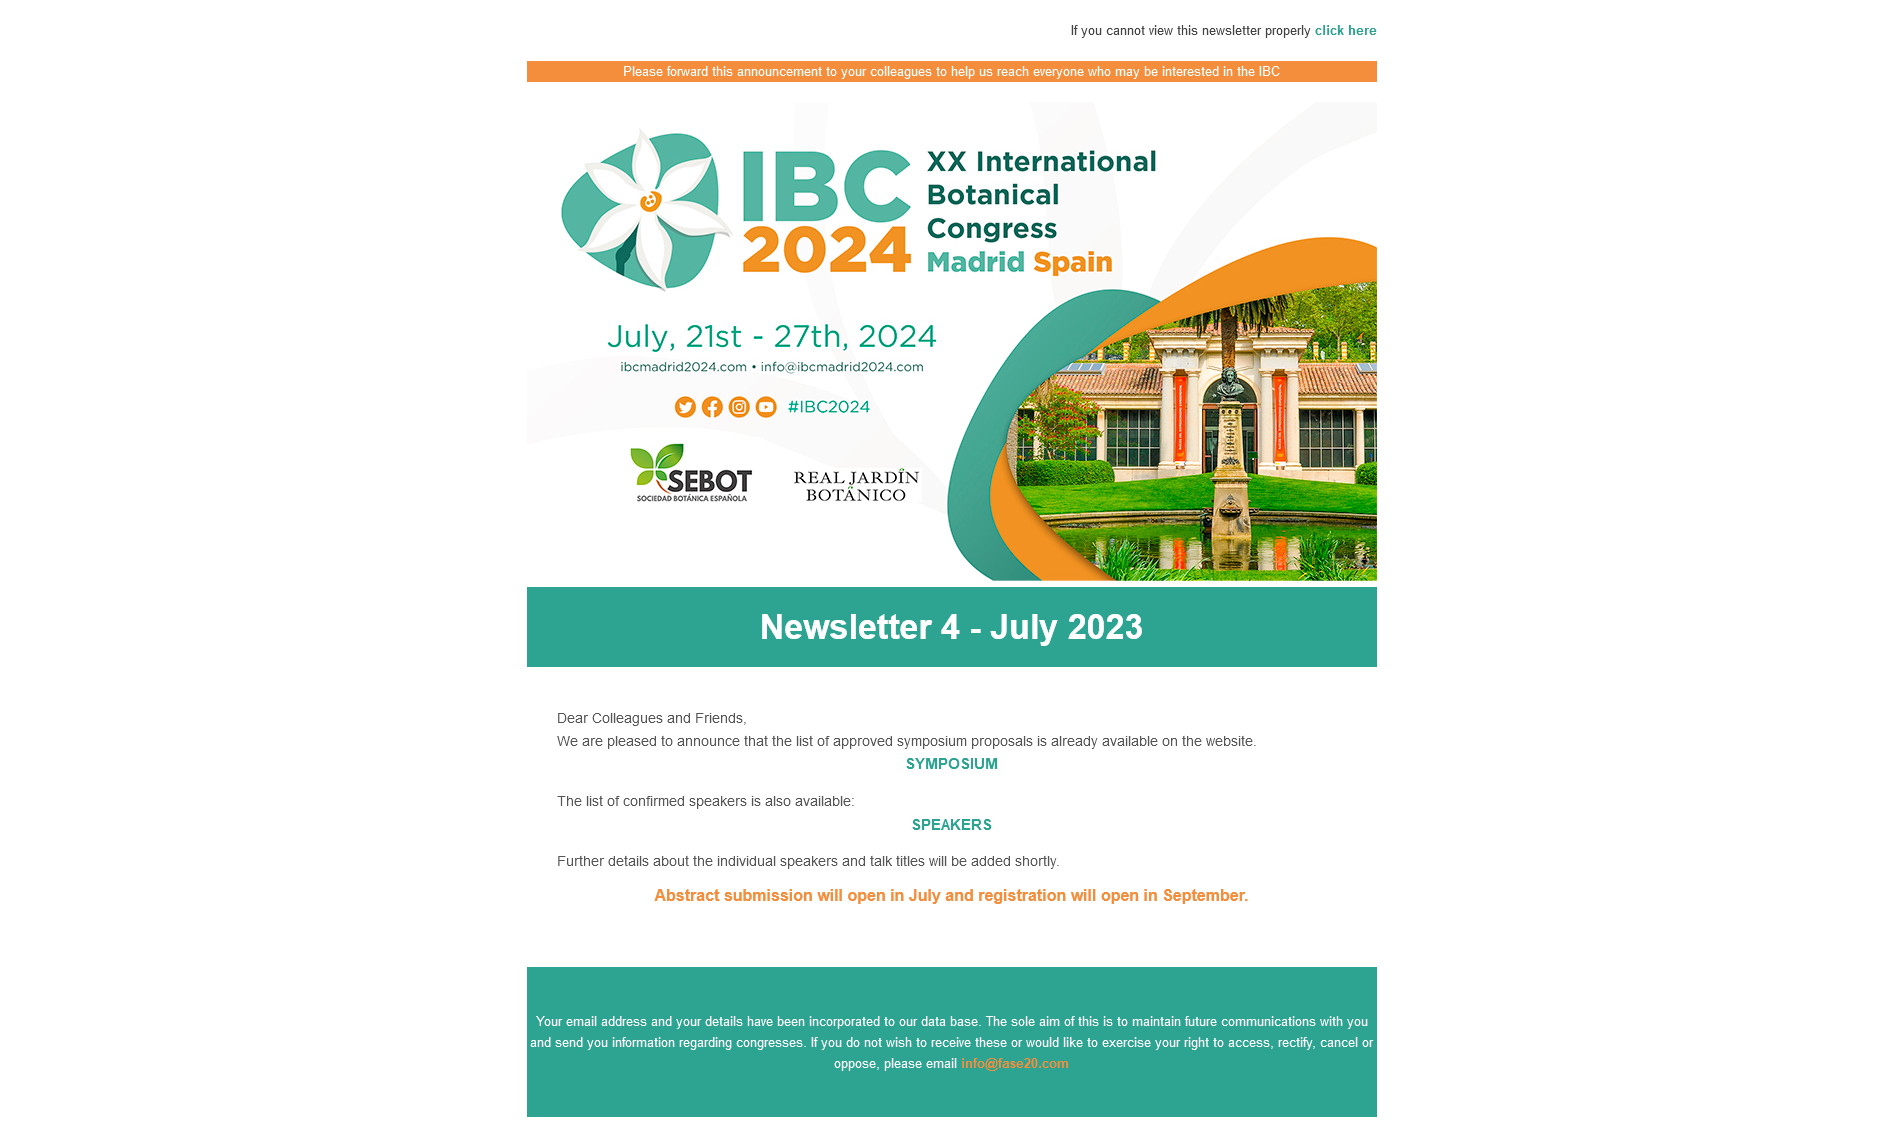 XX INTERNATIONAL BOTANICAL CONGRESS MADRID 2024 - Newsletter 4